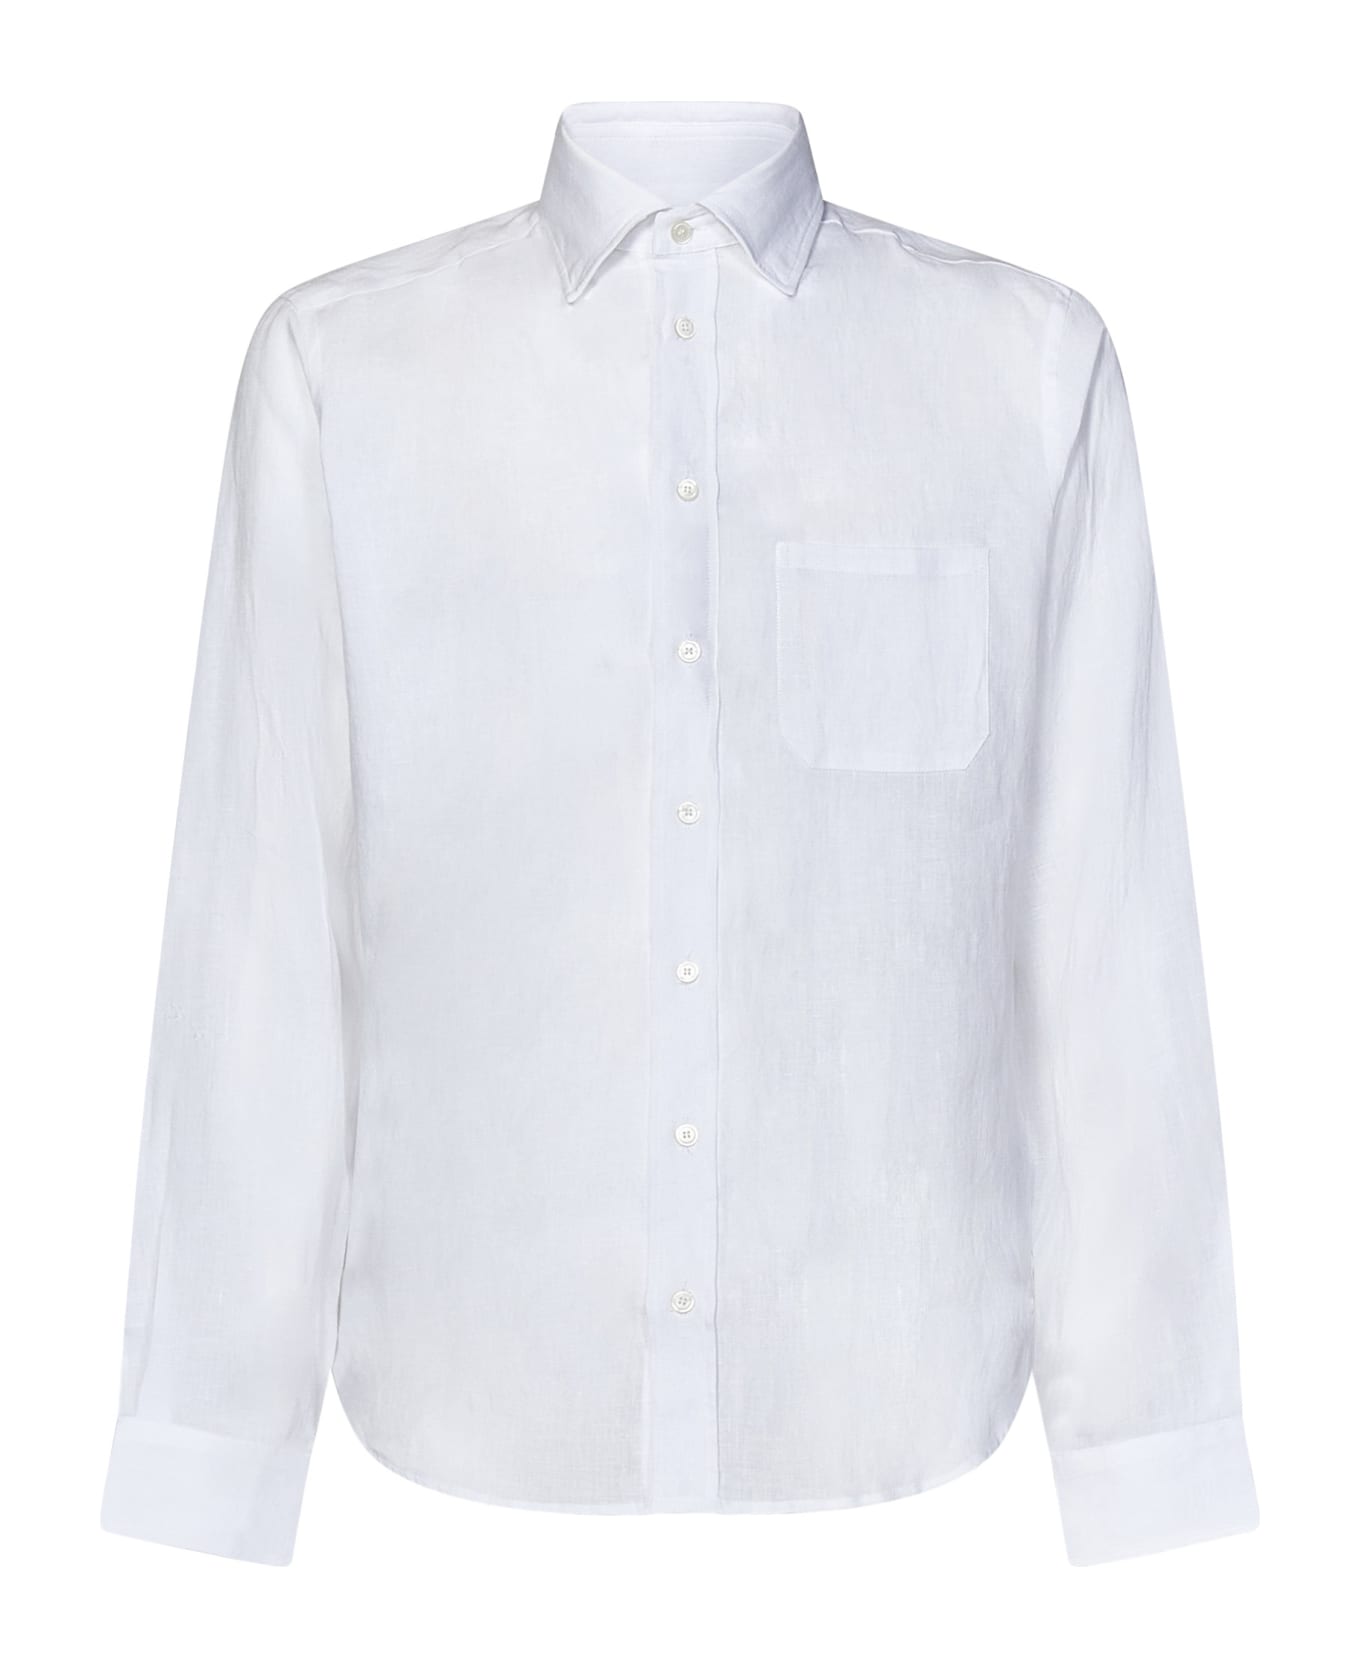 Sease Classic Bd Shirt - White シャツ